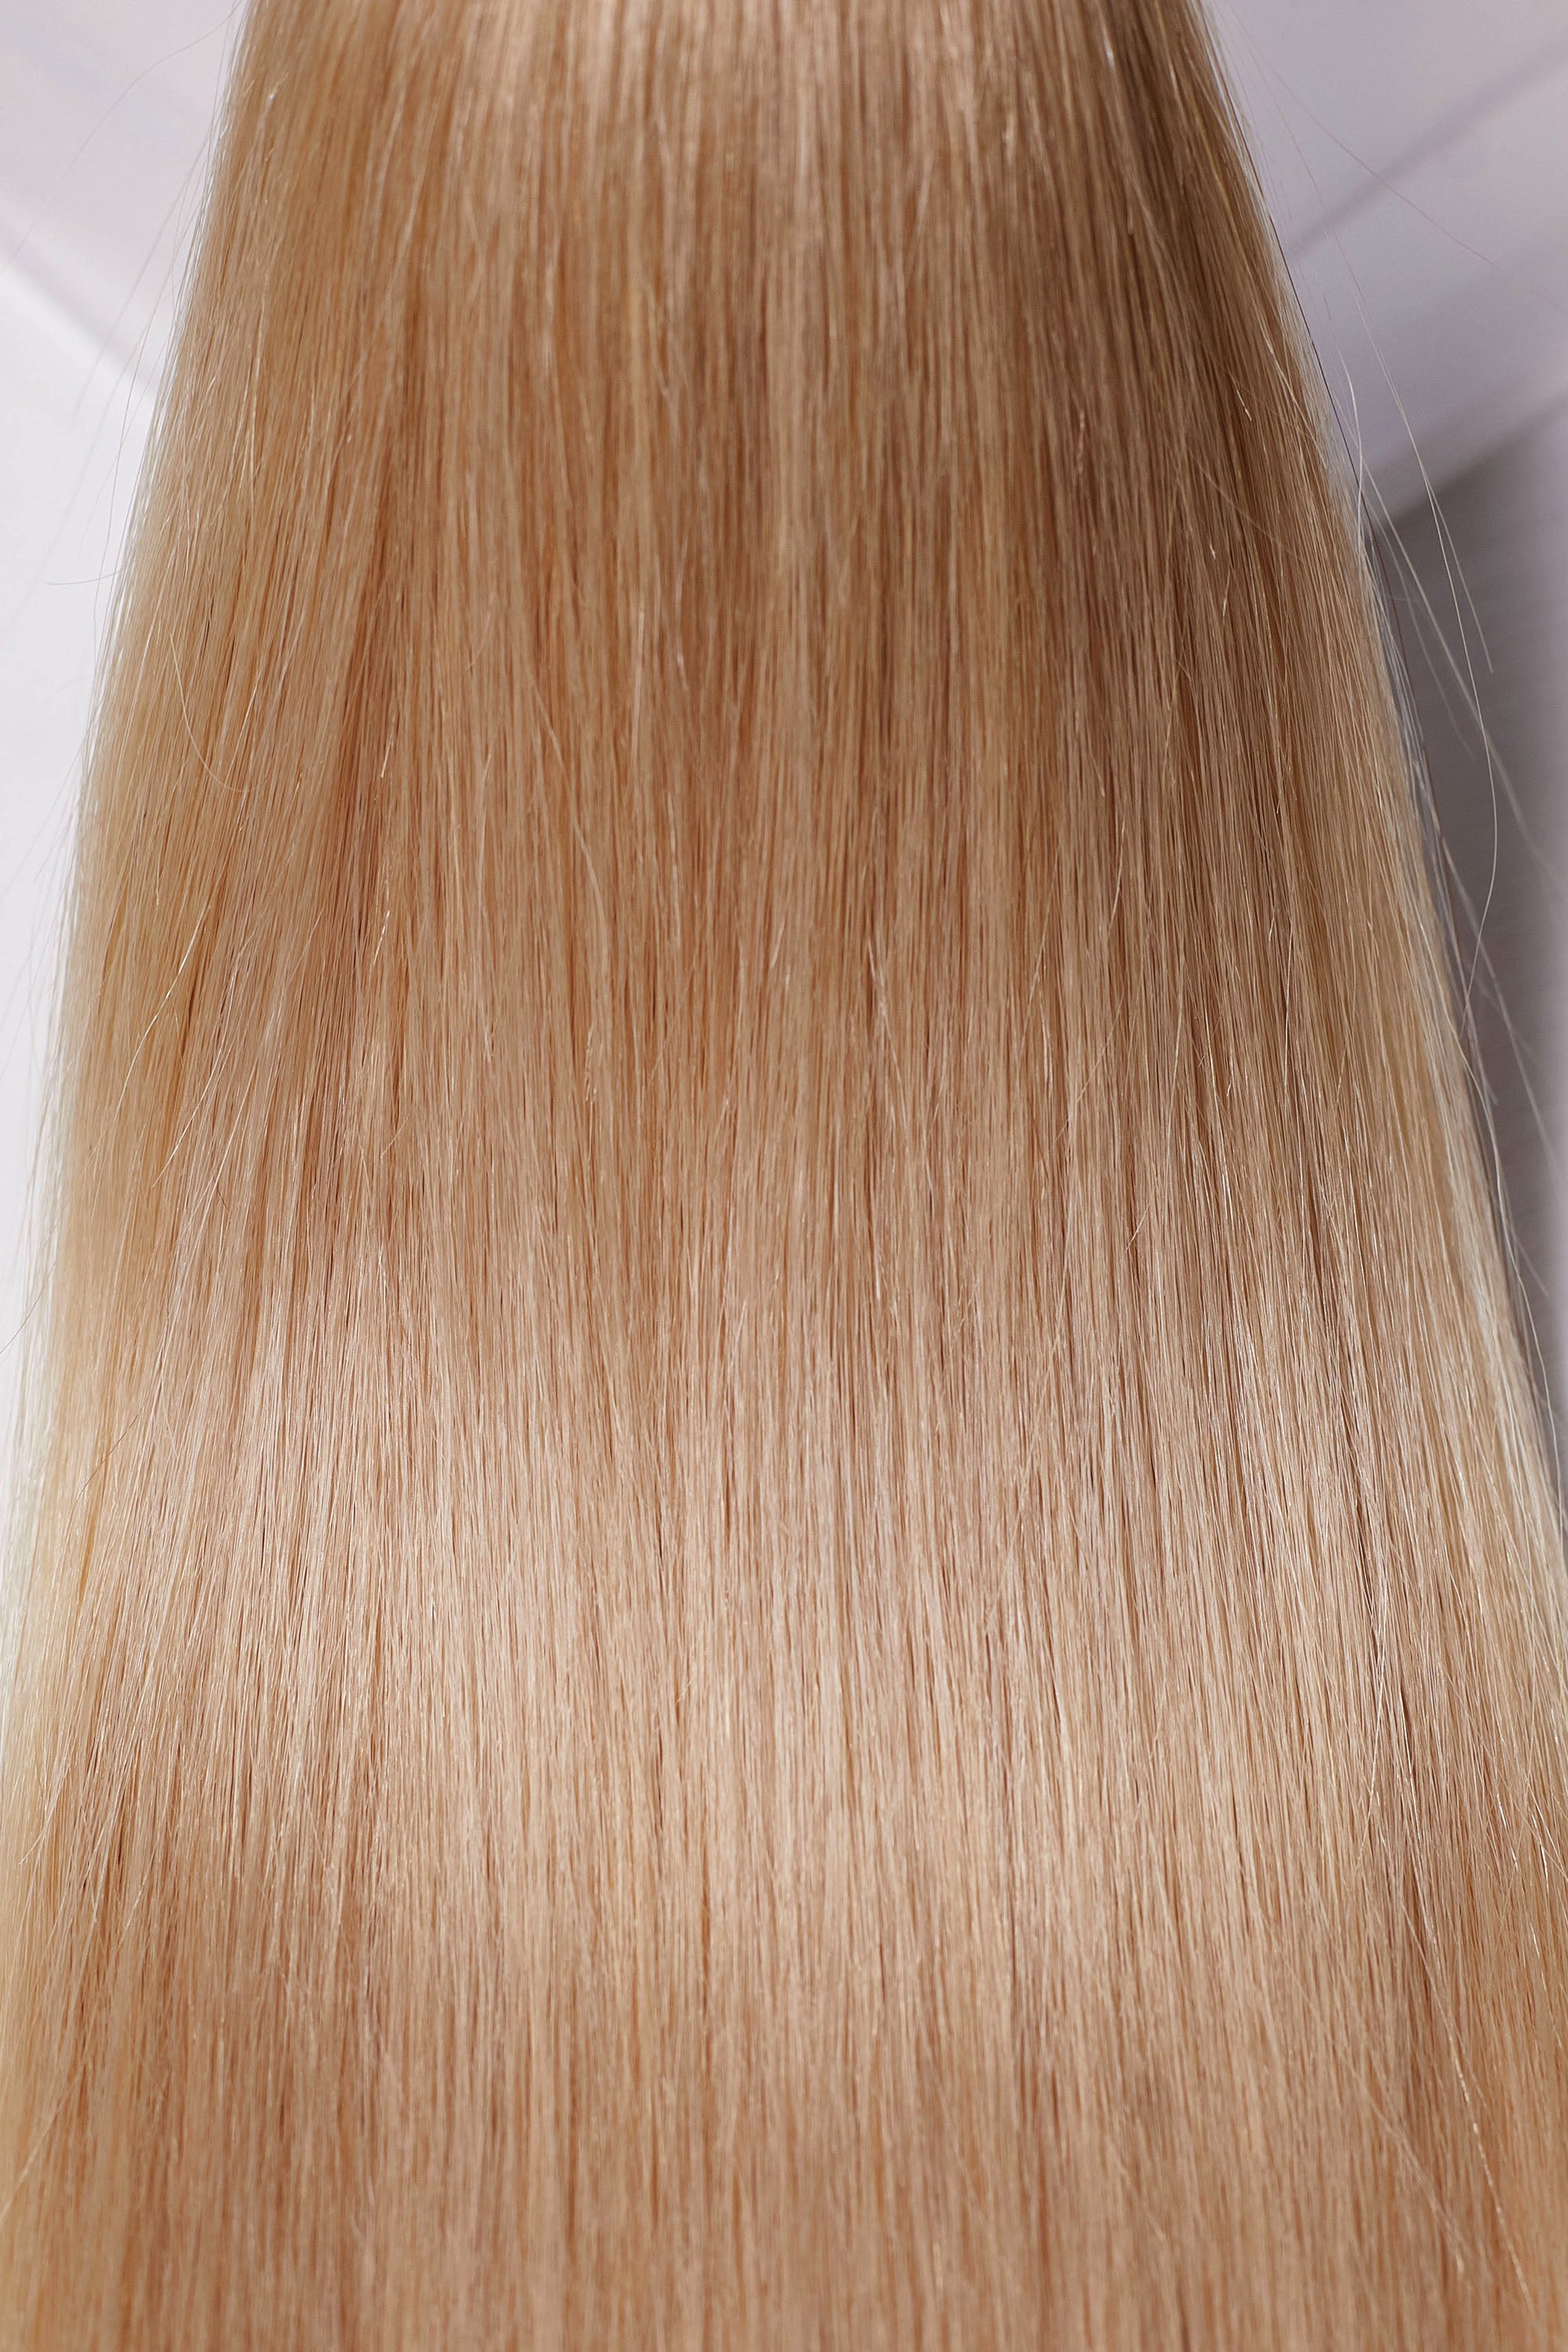 Behair professional Keratin Tip "Premium" 16" (40cm) Natural Straight Light Gold Sand #16 - 25g (Micro - 0.5g each pcs) hair extensions